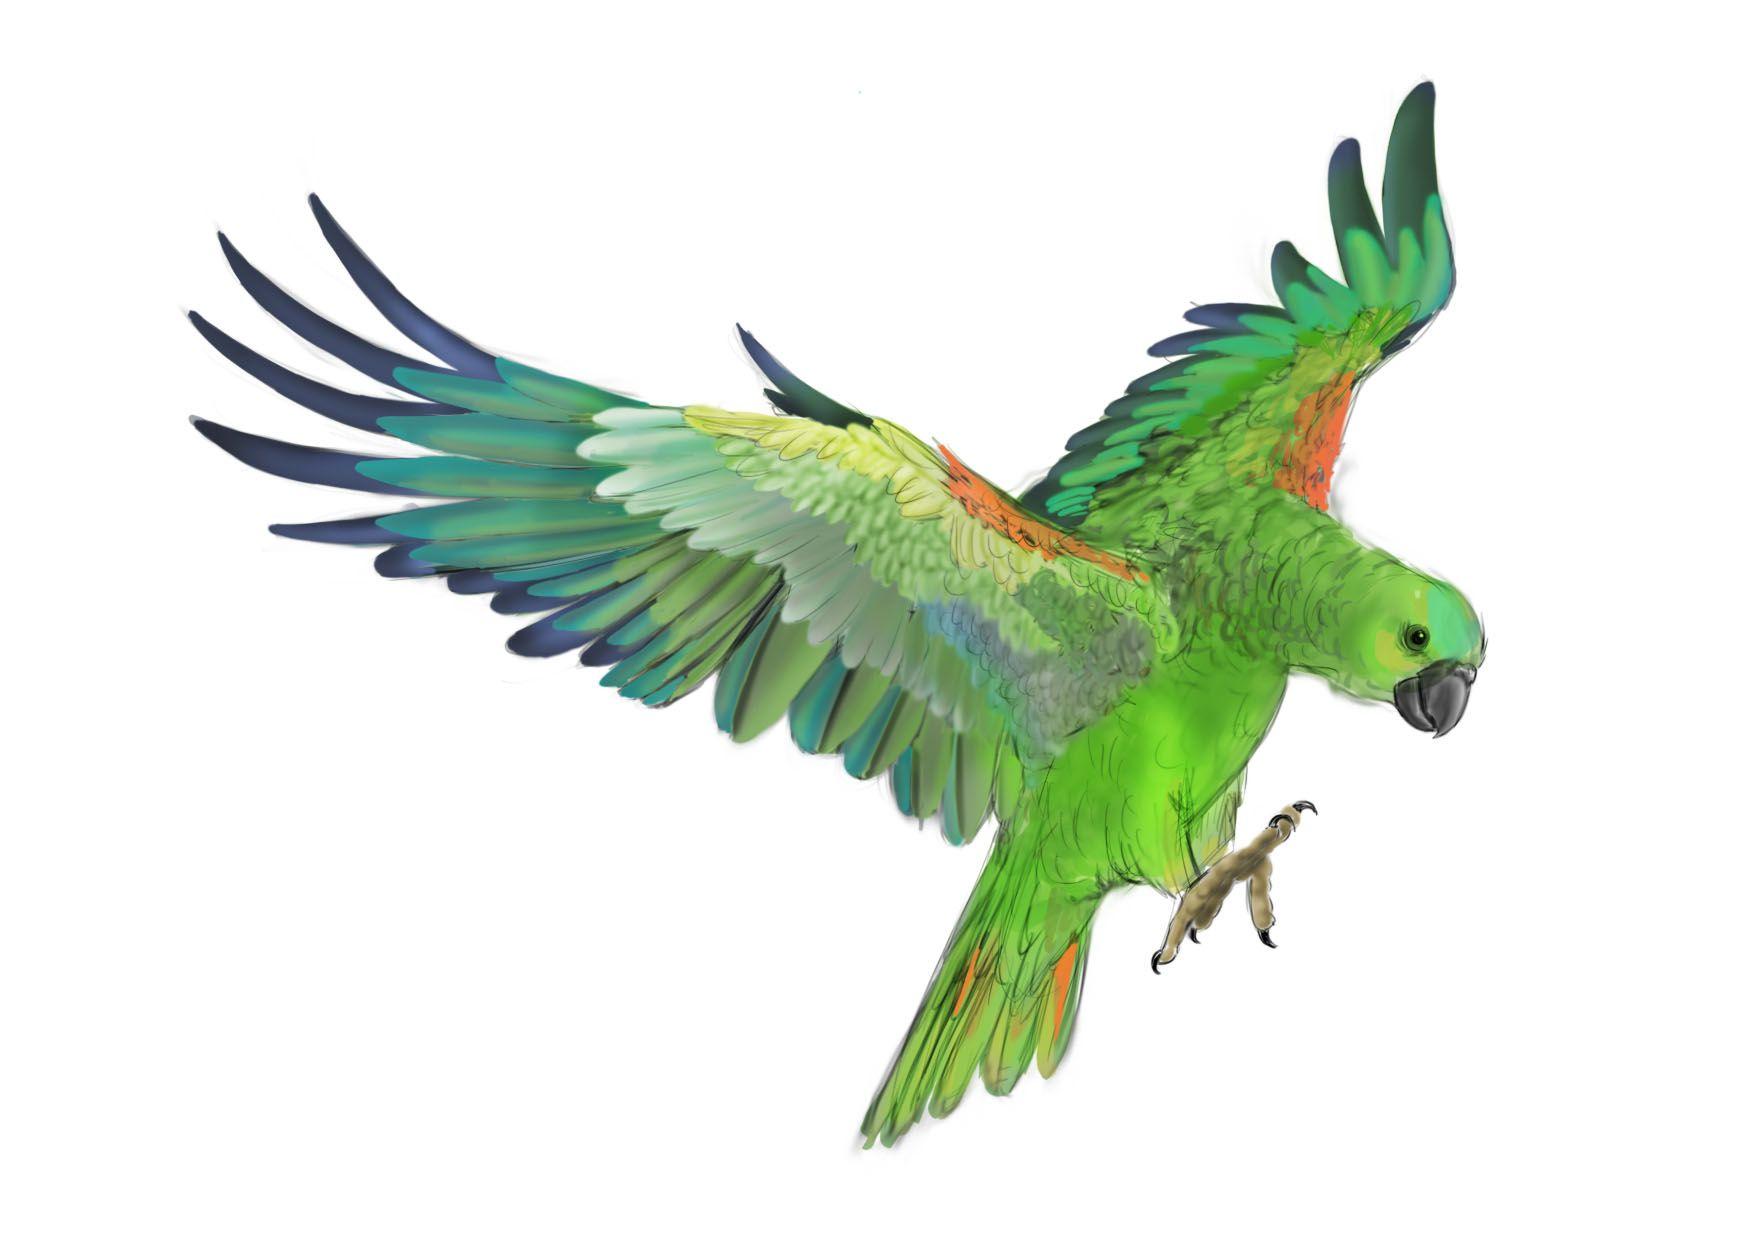 Download wallpaper: clipart, green parrot, download photo